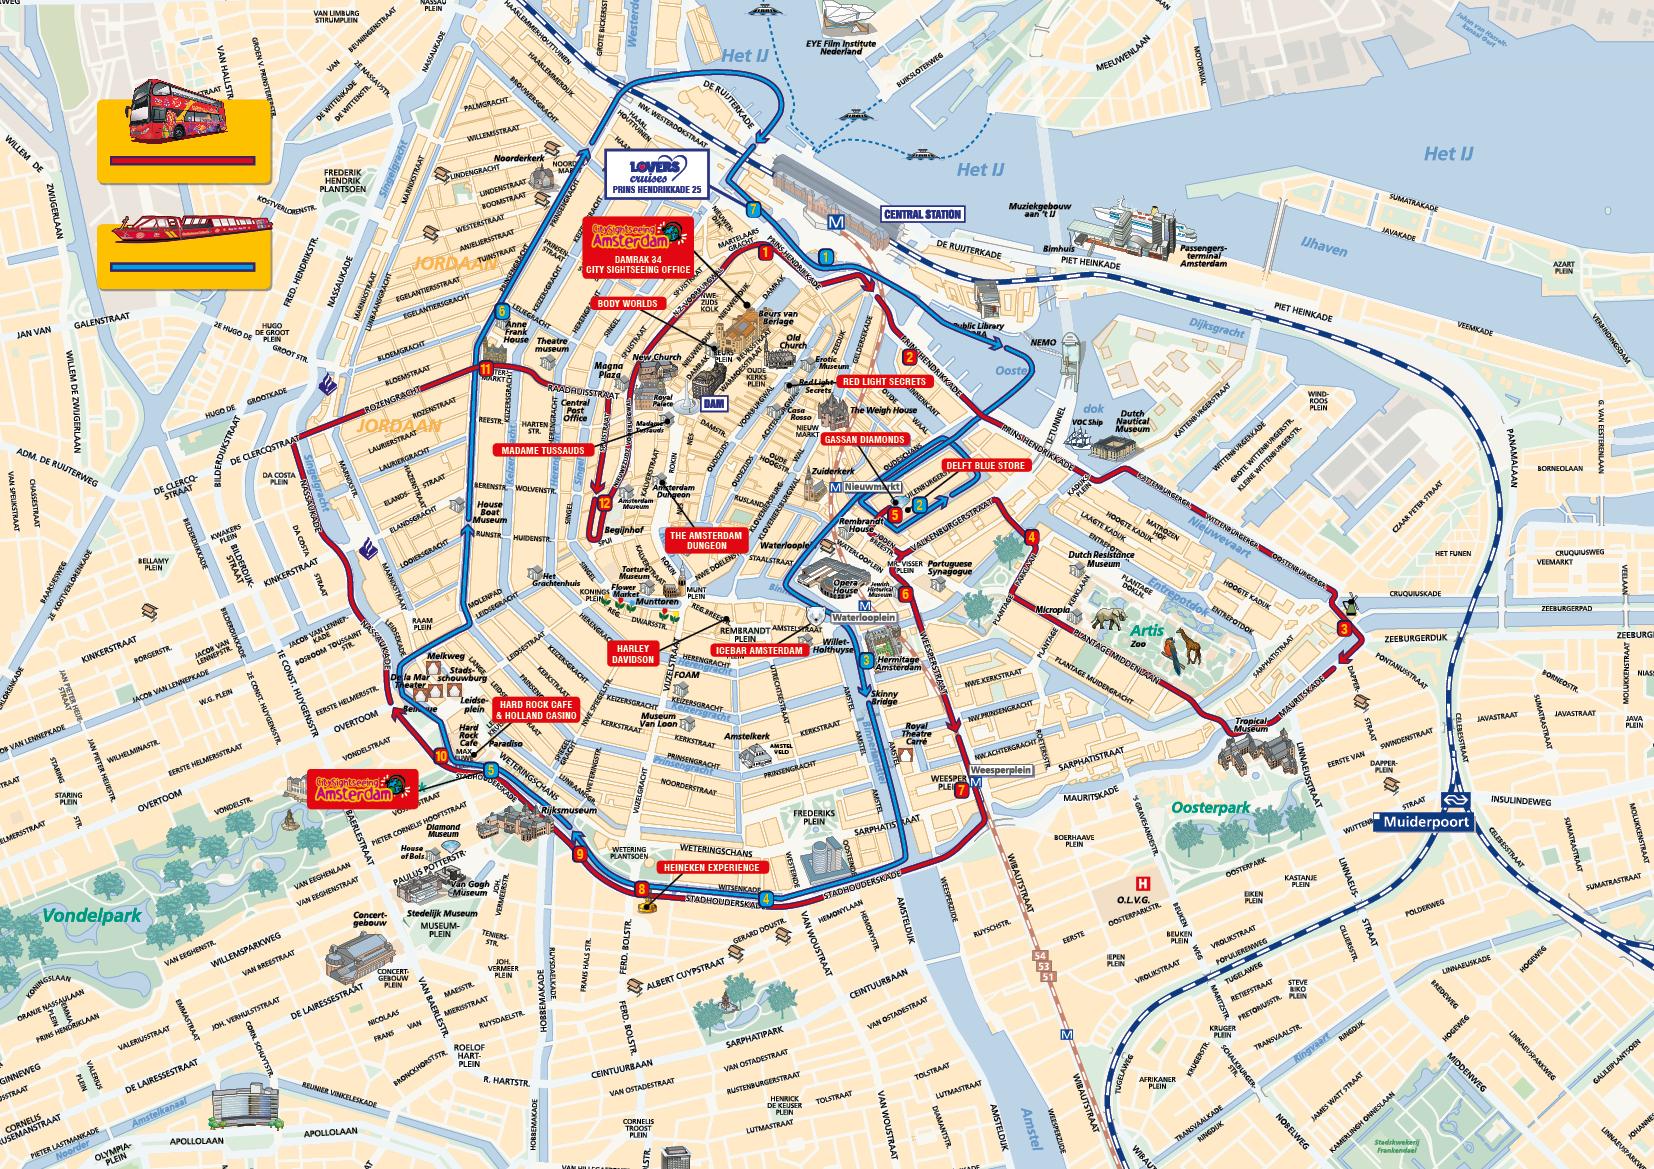 Amsterdam sites map - Amsterdam landmarks map (Netherlands)